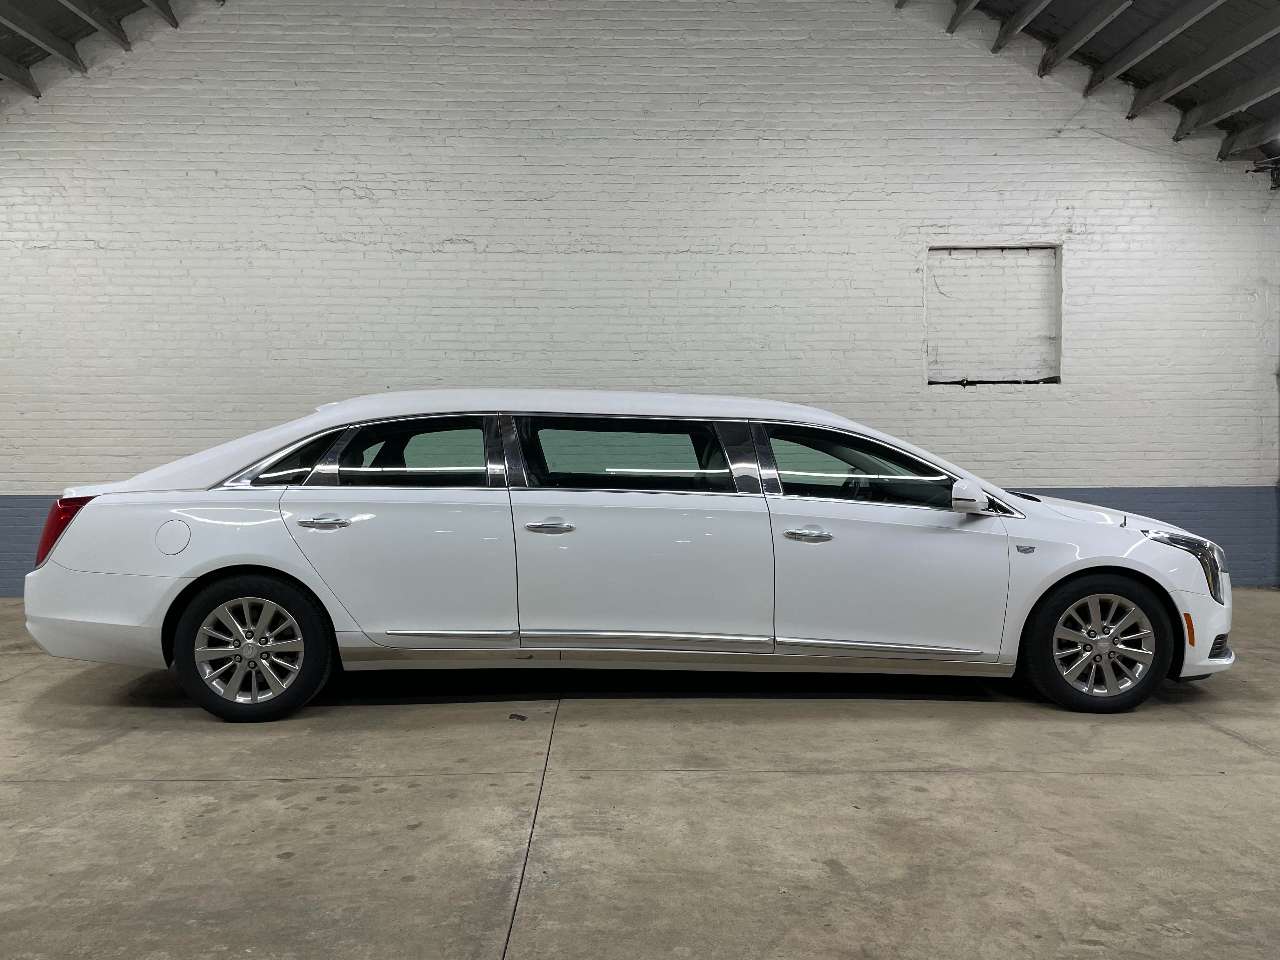 2019 Cadillac Eagle Kingsley Limousine 1695743845281